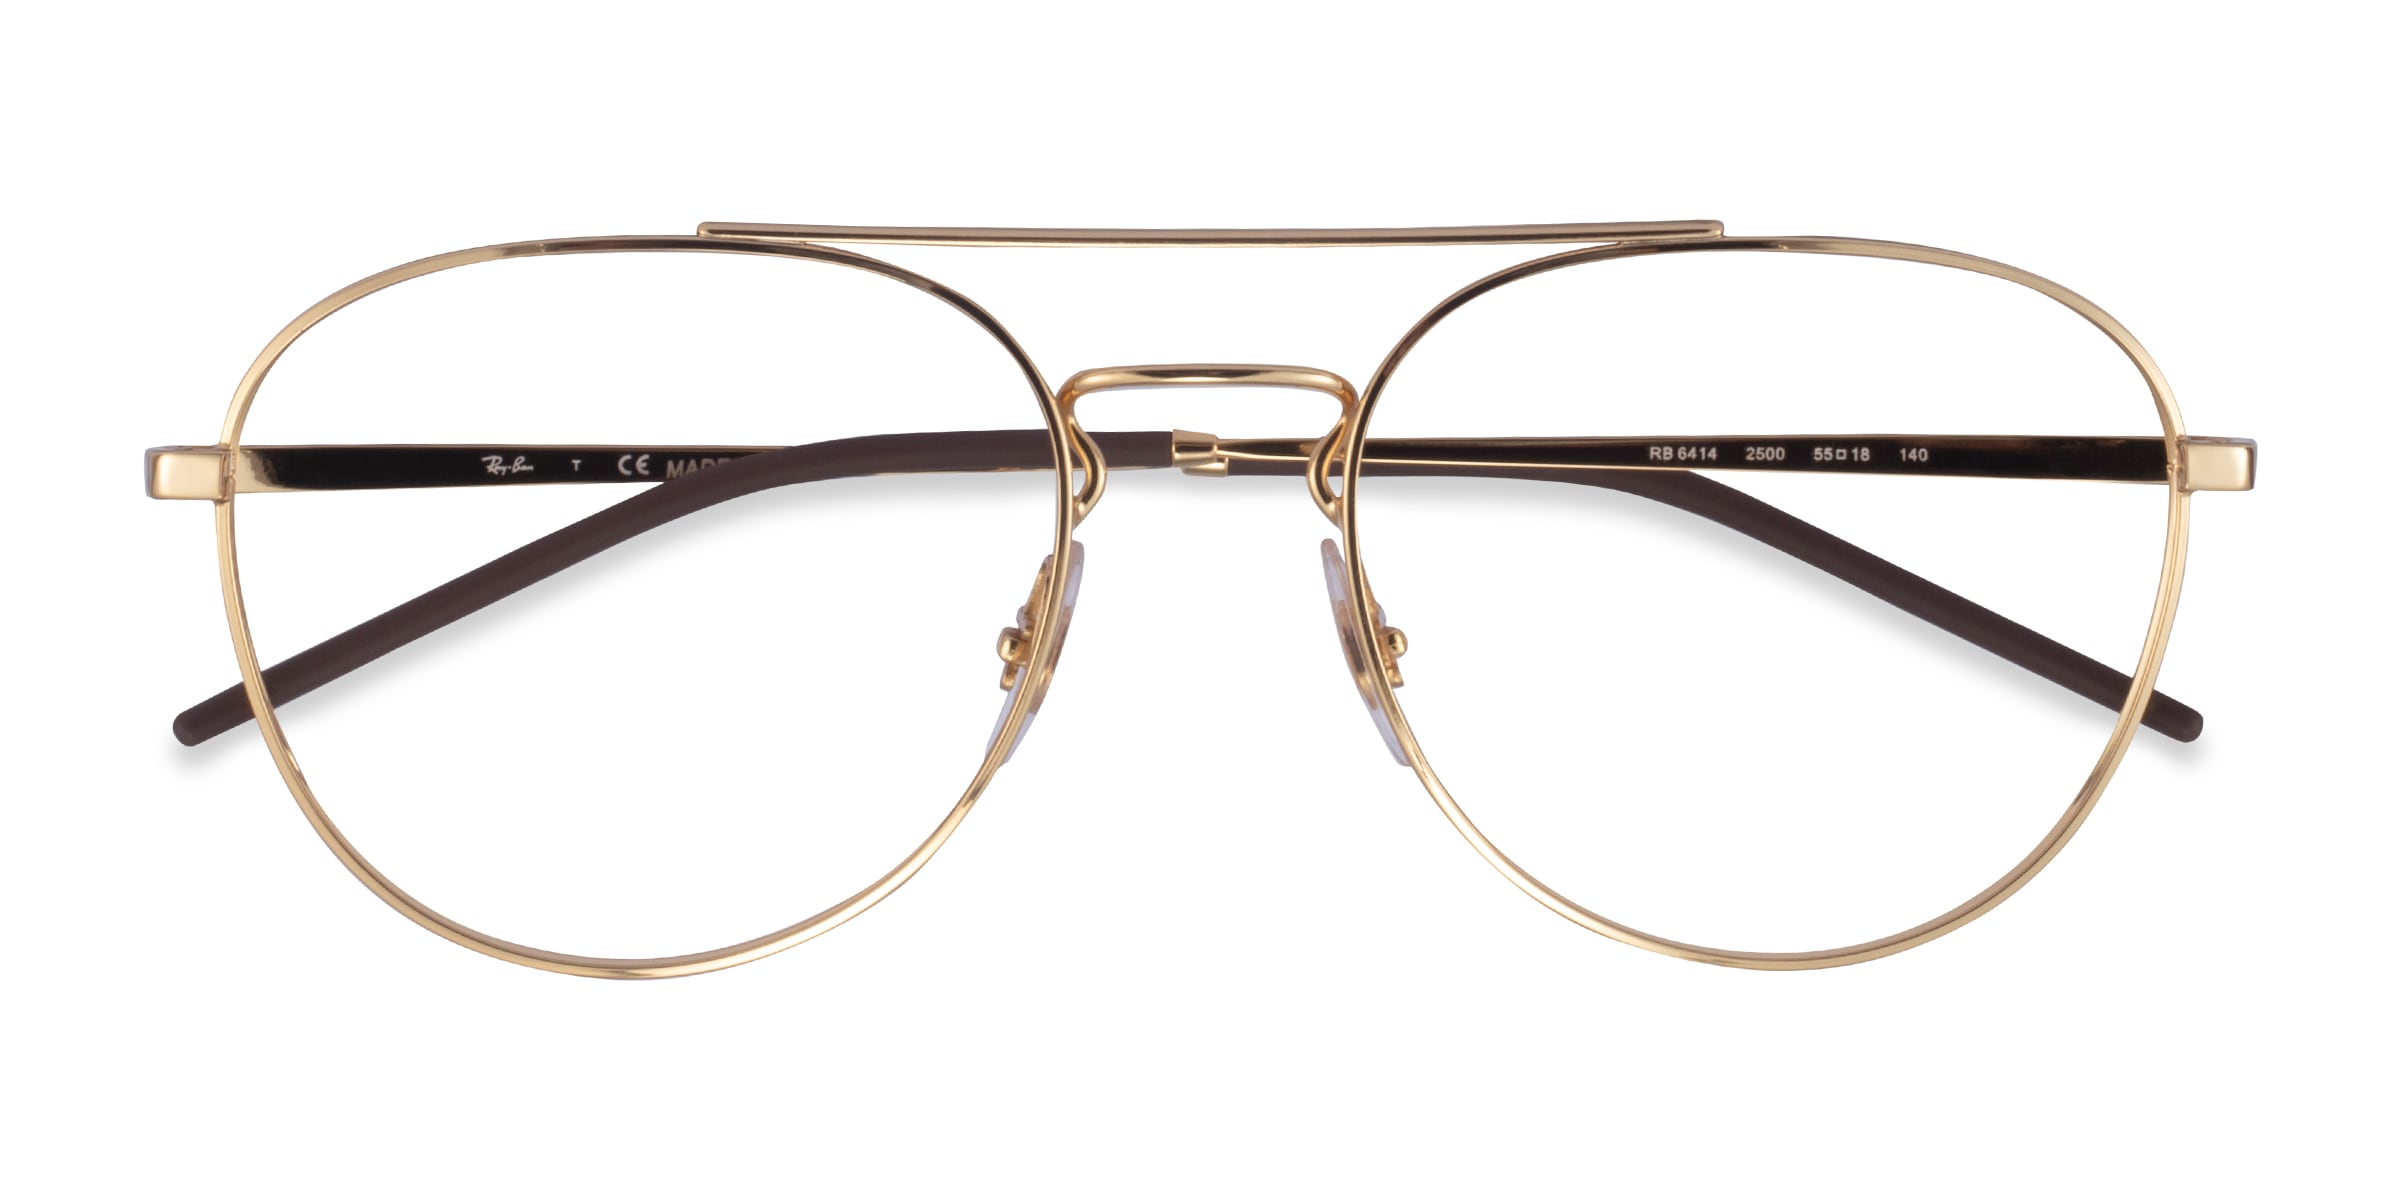 Ray-Ban RB6414 - Aviator Gold Frame Eyeglasses | EyeBuyDirect